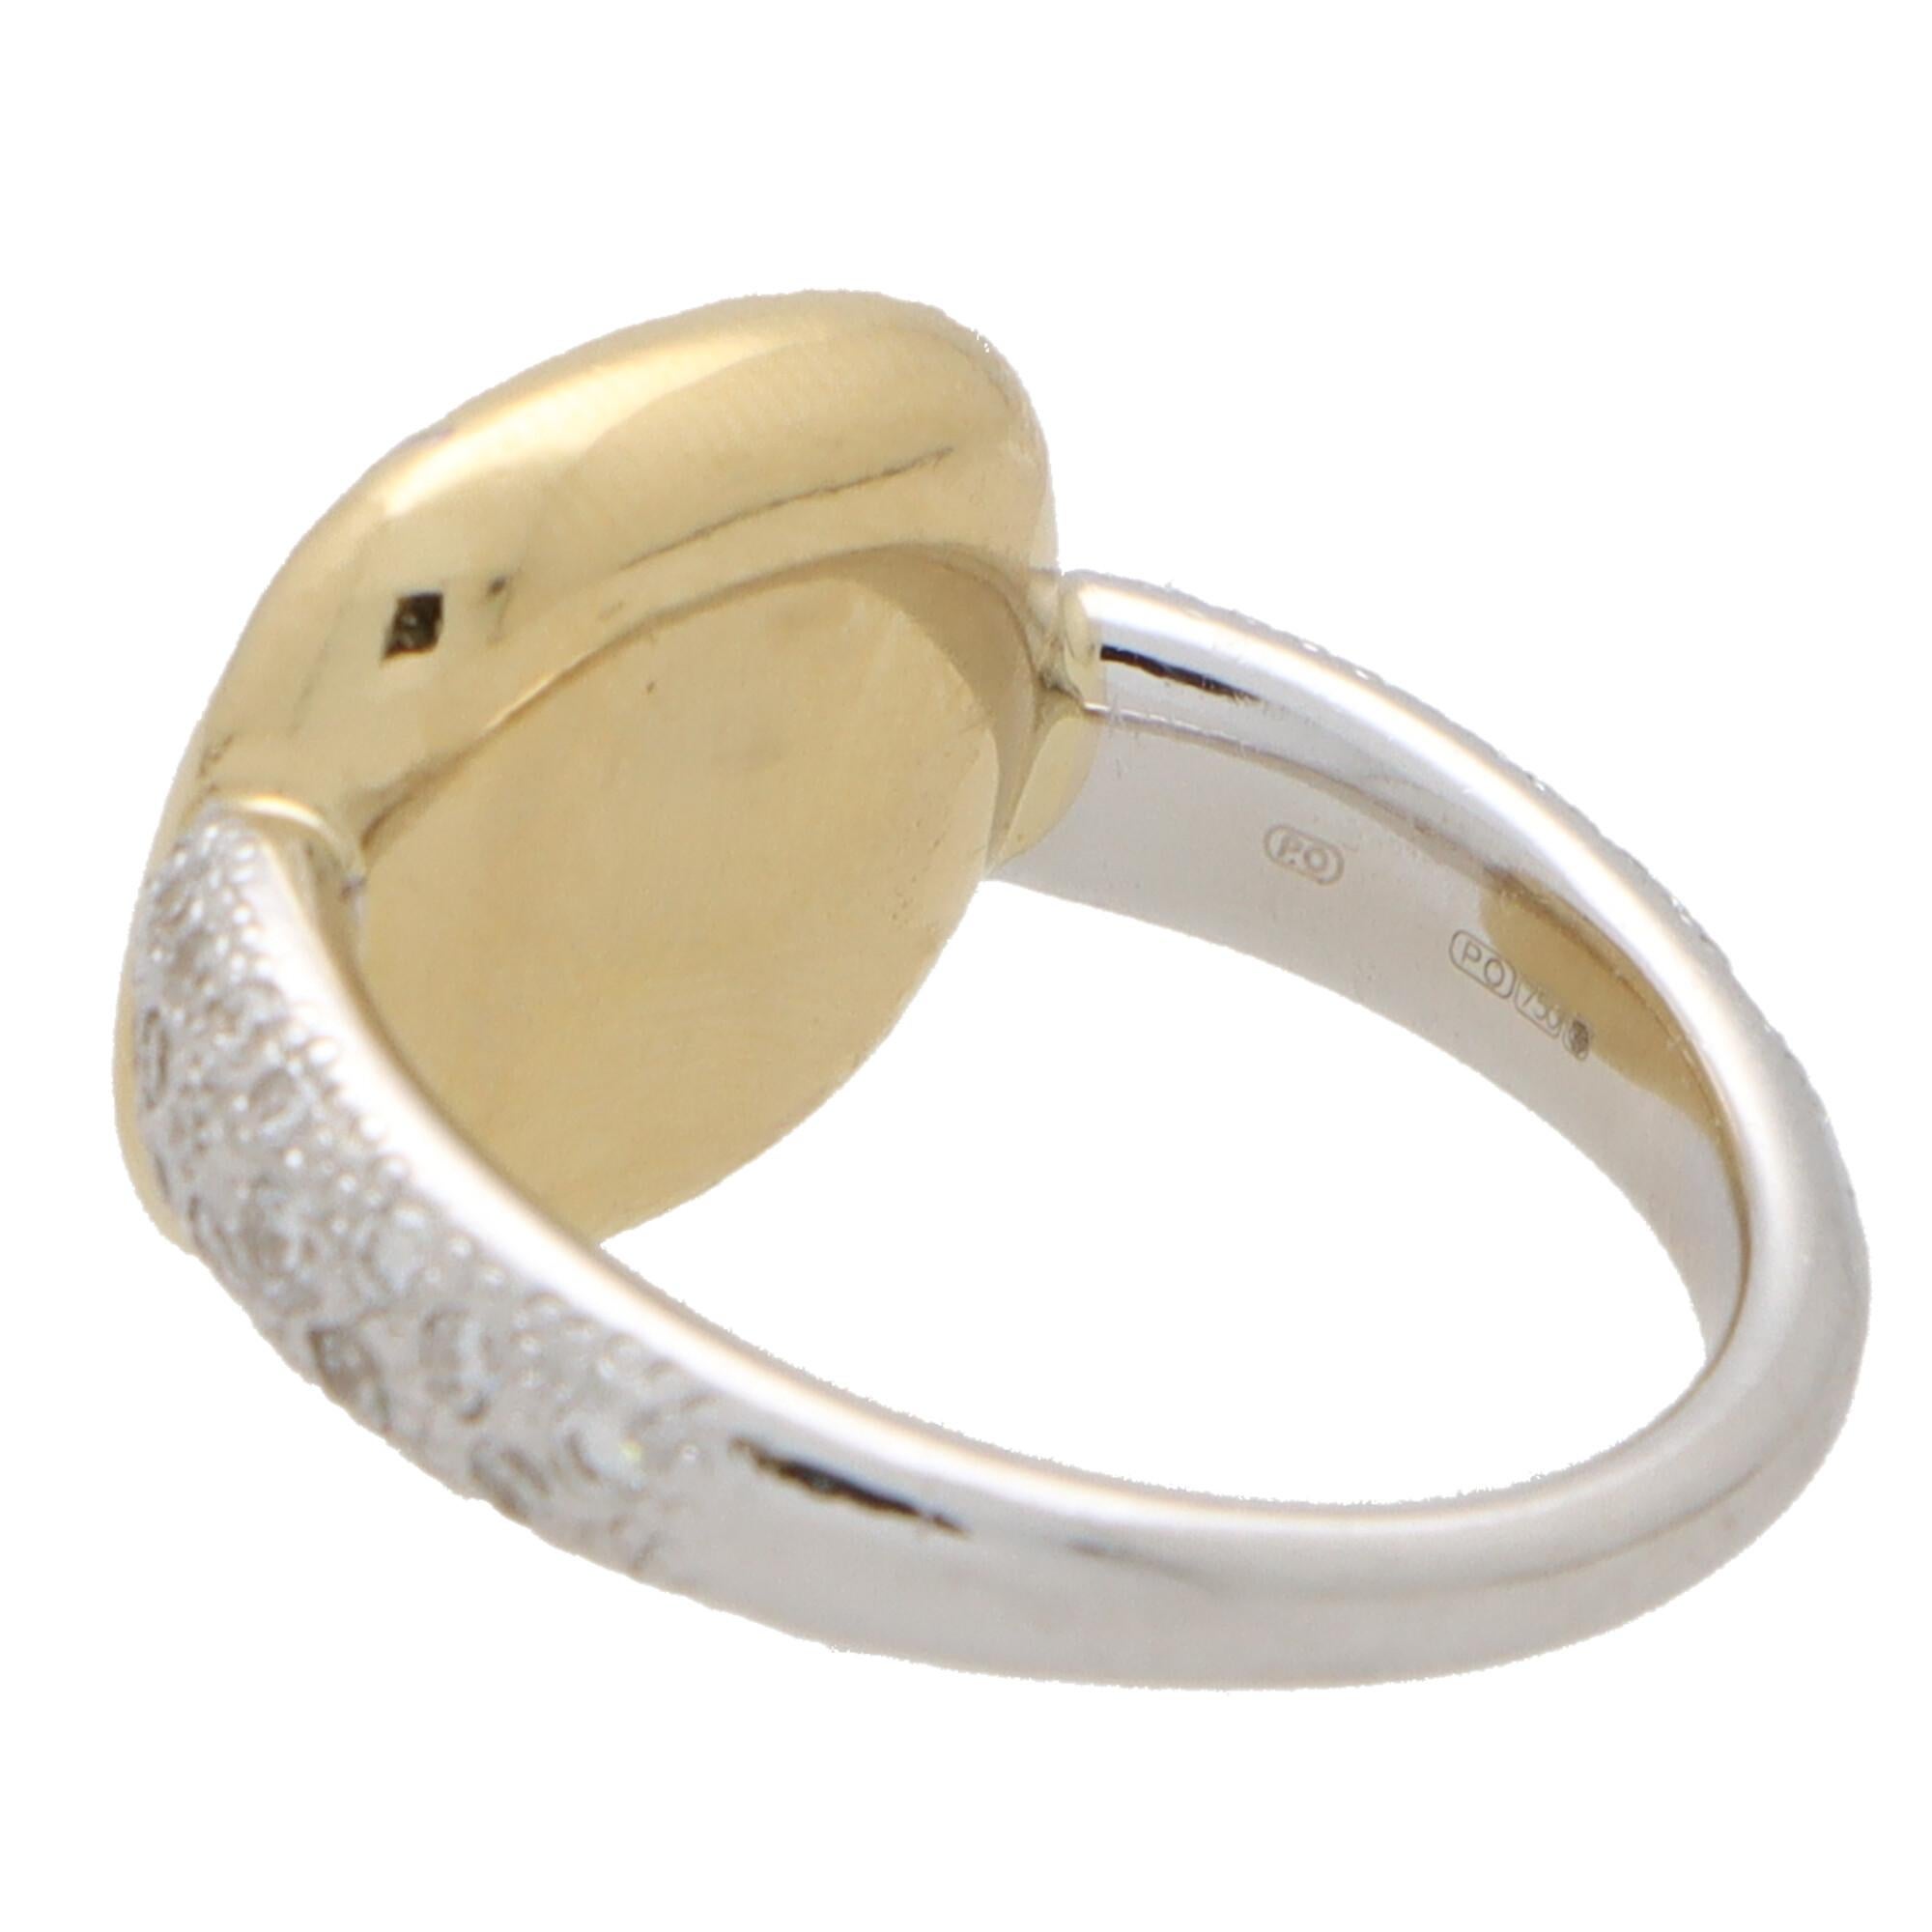 Mixed Cut Vintage Pomellato 'Sherazade' Garnet and Diamond Ring in 18k Gold